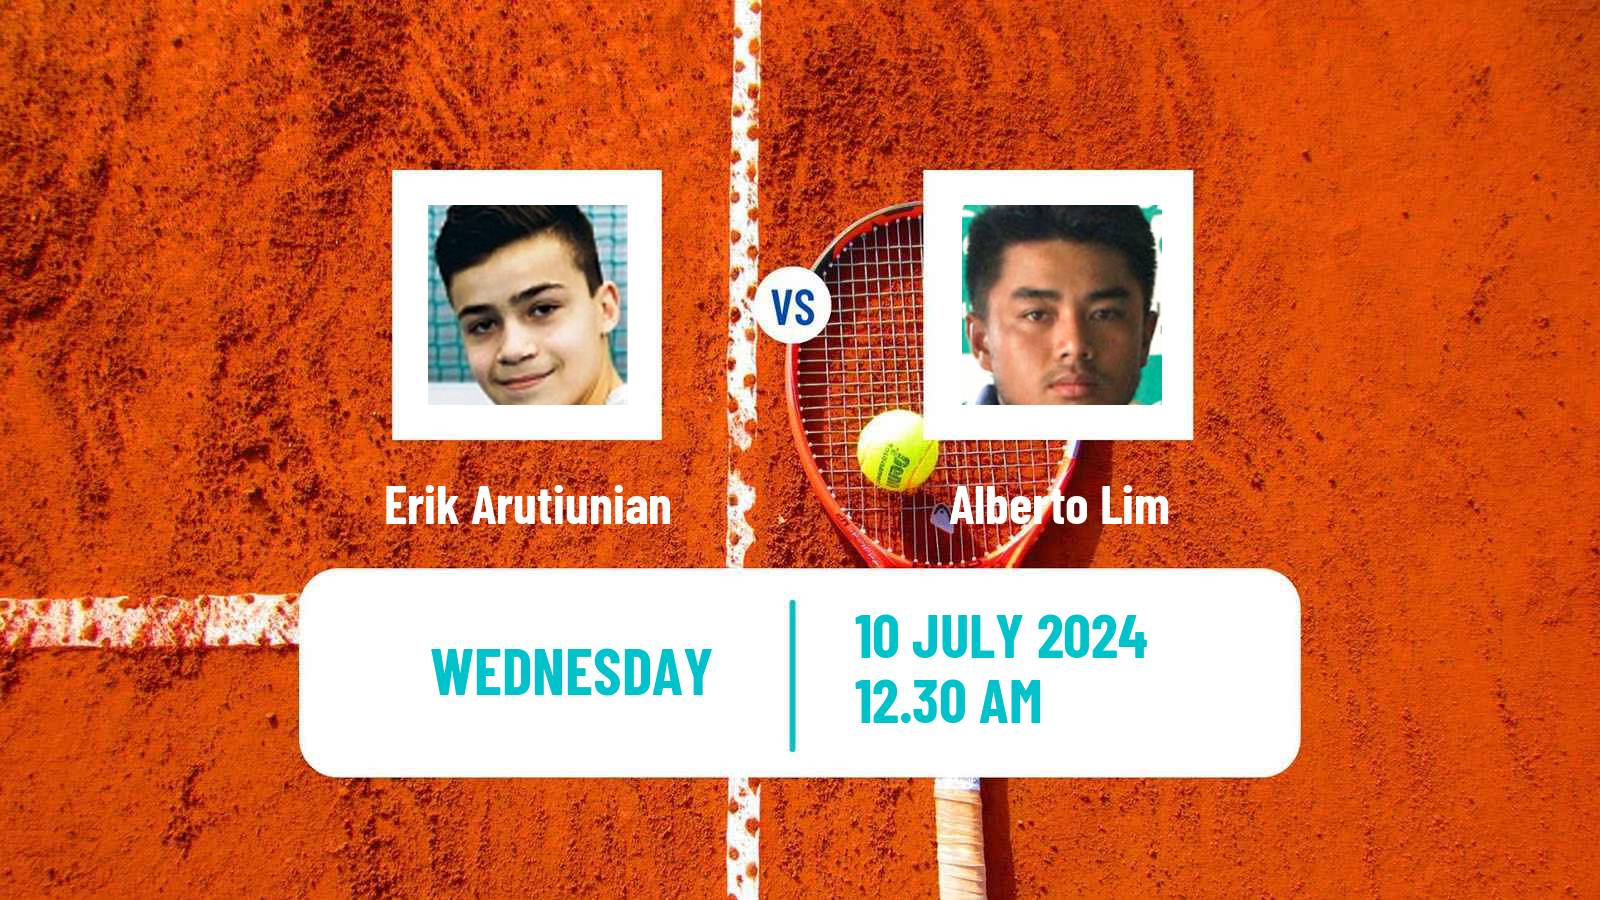 Tennis ITF M25 Tianjin Men Erik Arutiunian - Alberto Lim